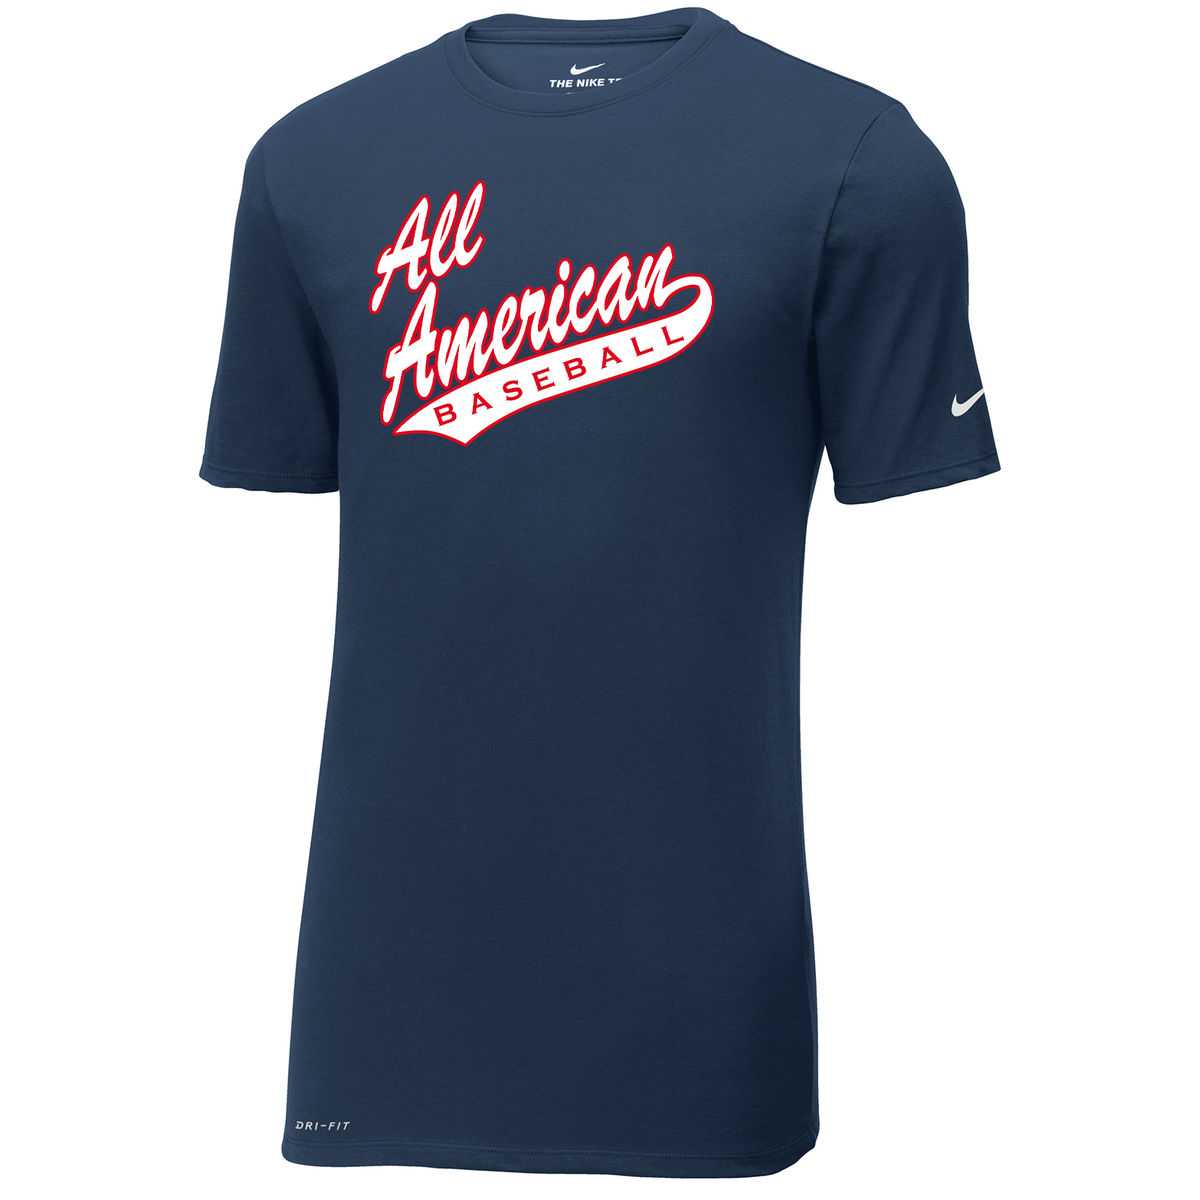 All American Baseball Nike Dri-FIT Tee